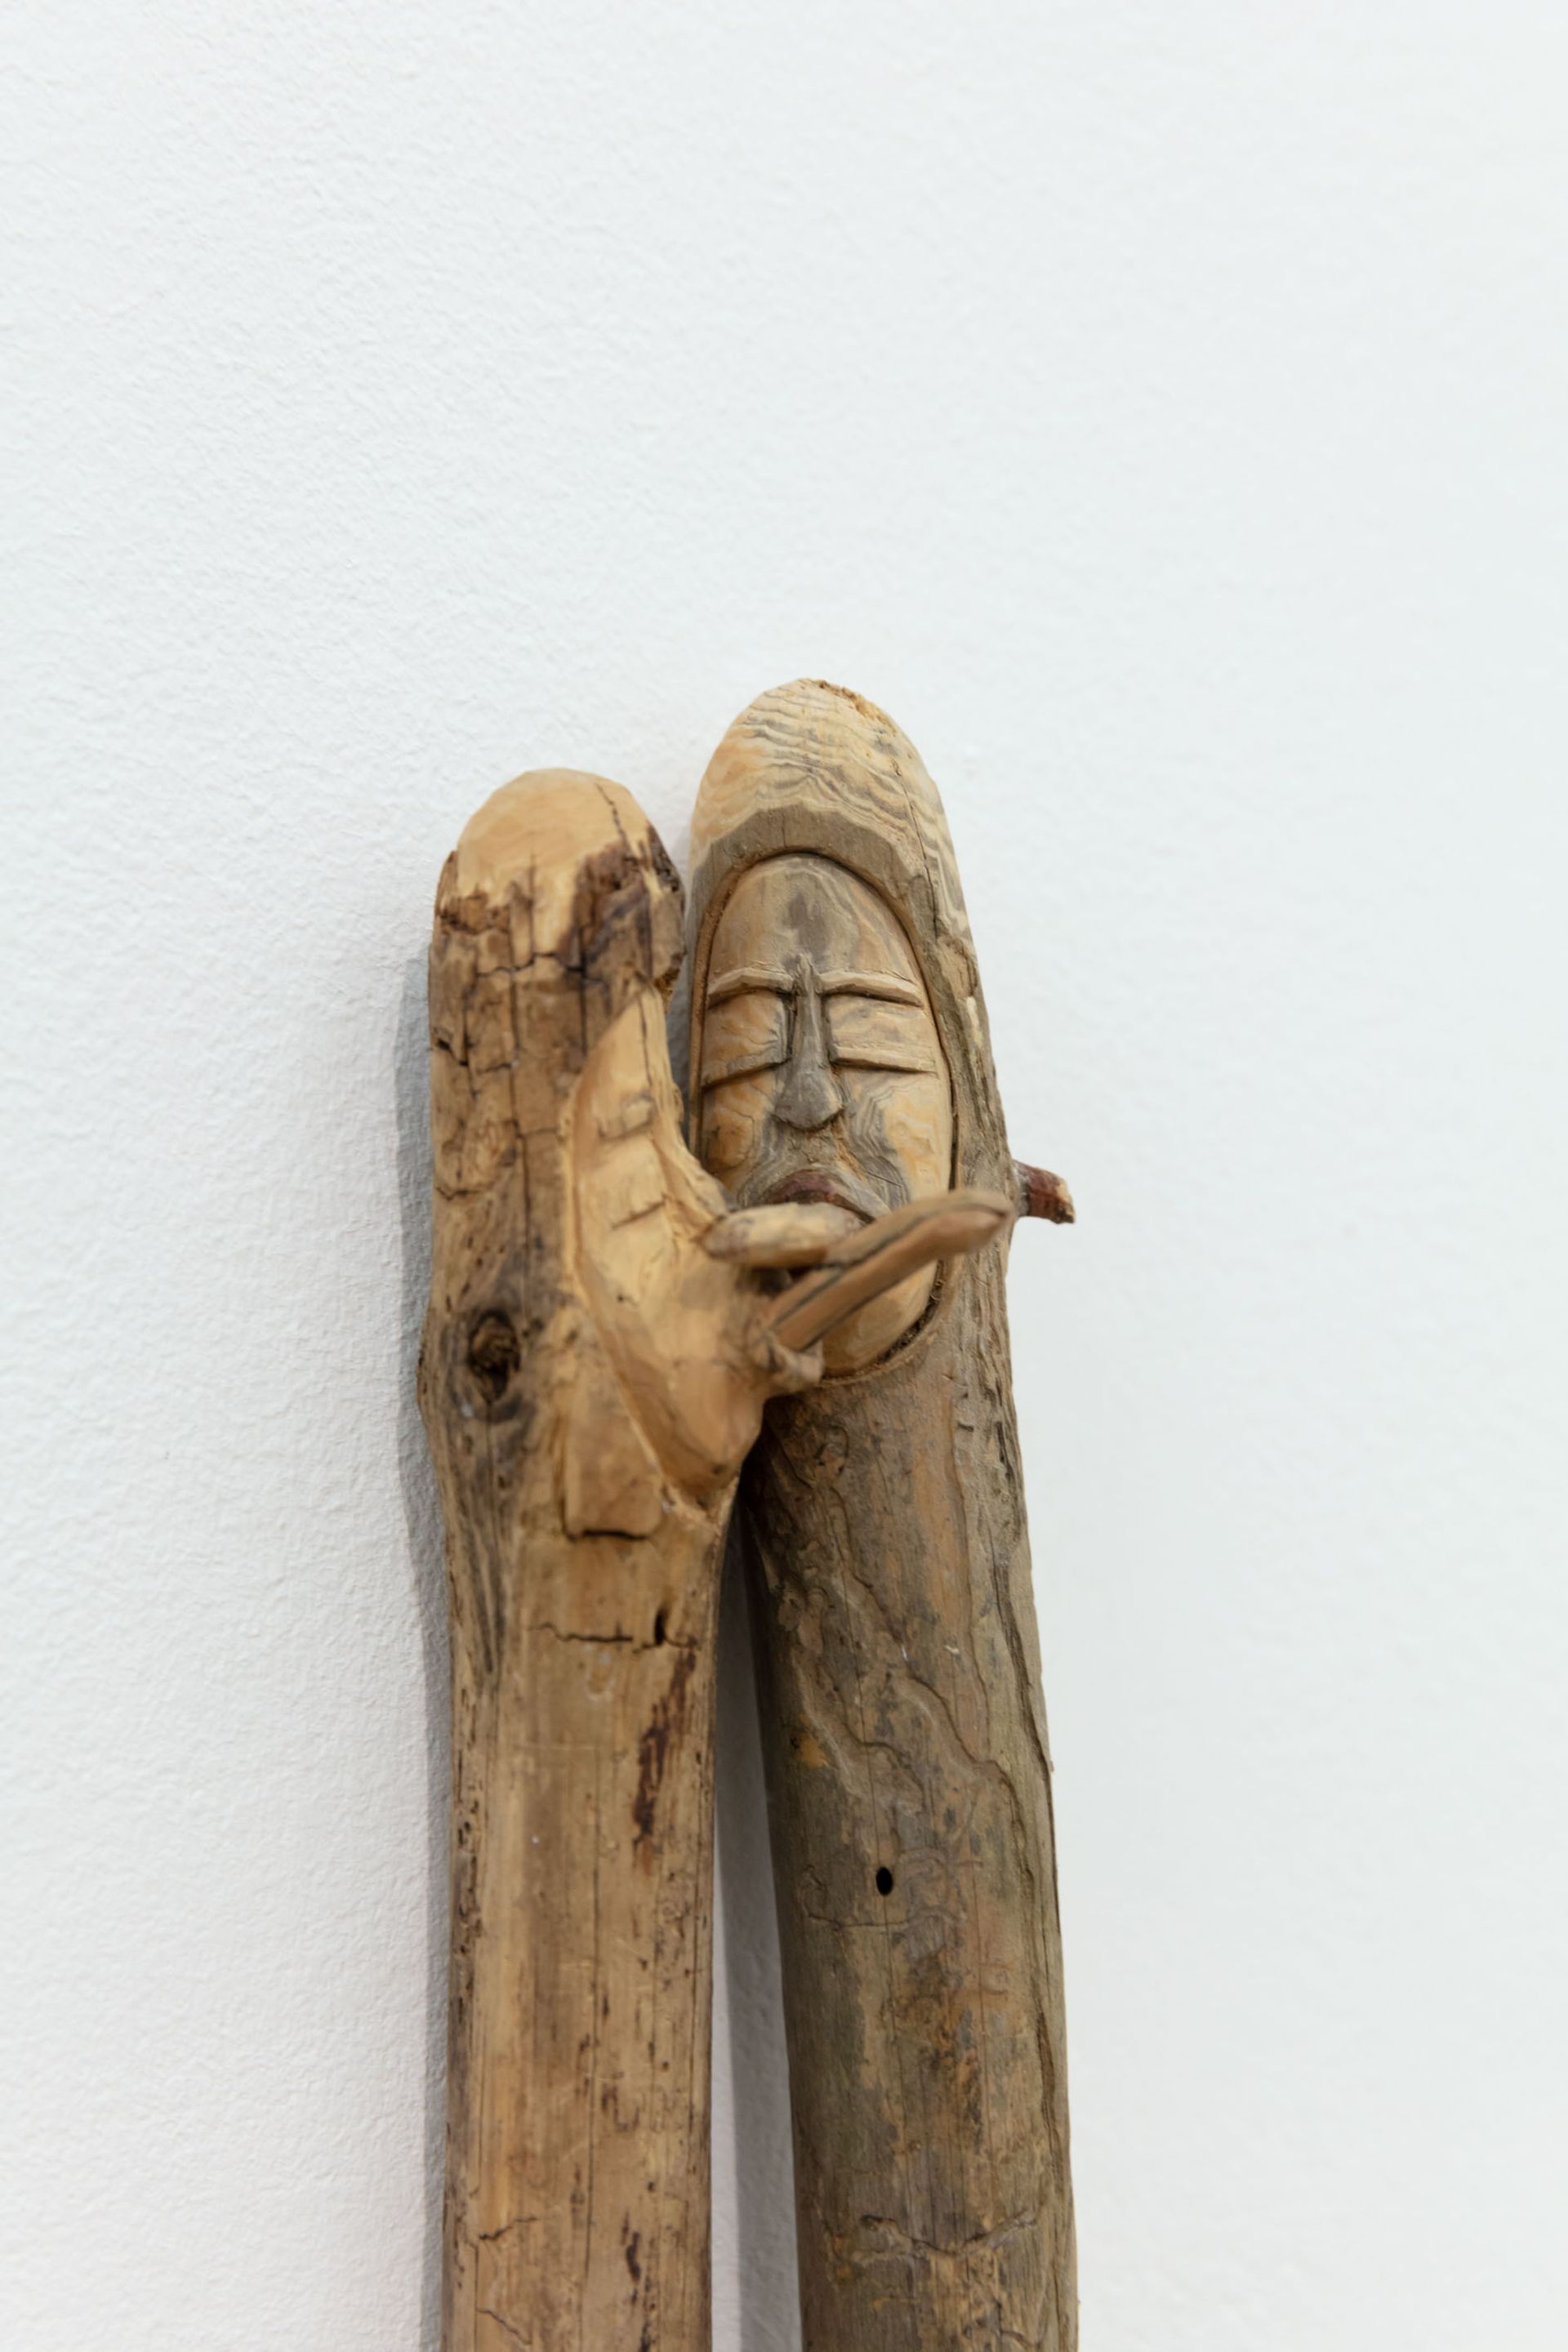 Birke Gorm, “IOU” [detail], 2021, wood, 41 × 8 × 7 cm, Courtesy the artist and Croy Nielsen, Vienna, photo: Sebastian Kissel